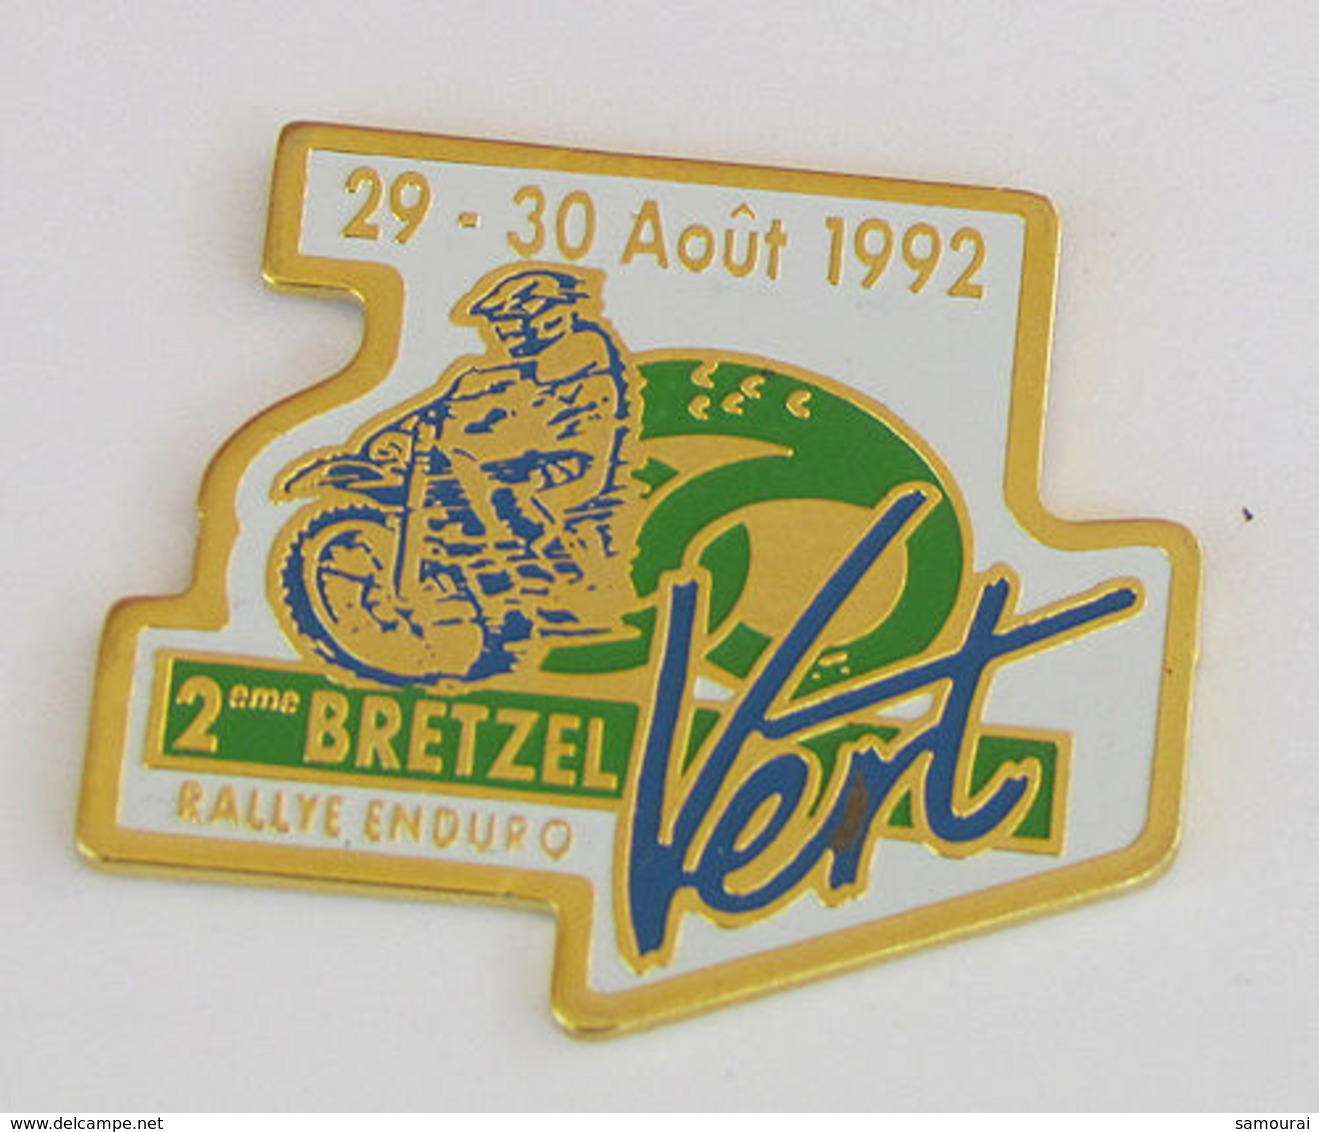 1 Pin's RALLYE ENDURO 2eme BRETZEL VERT 29-30 AOUT 1992 - Motos